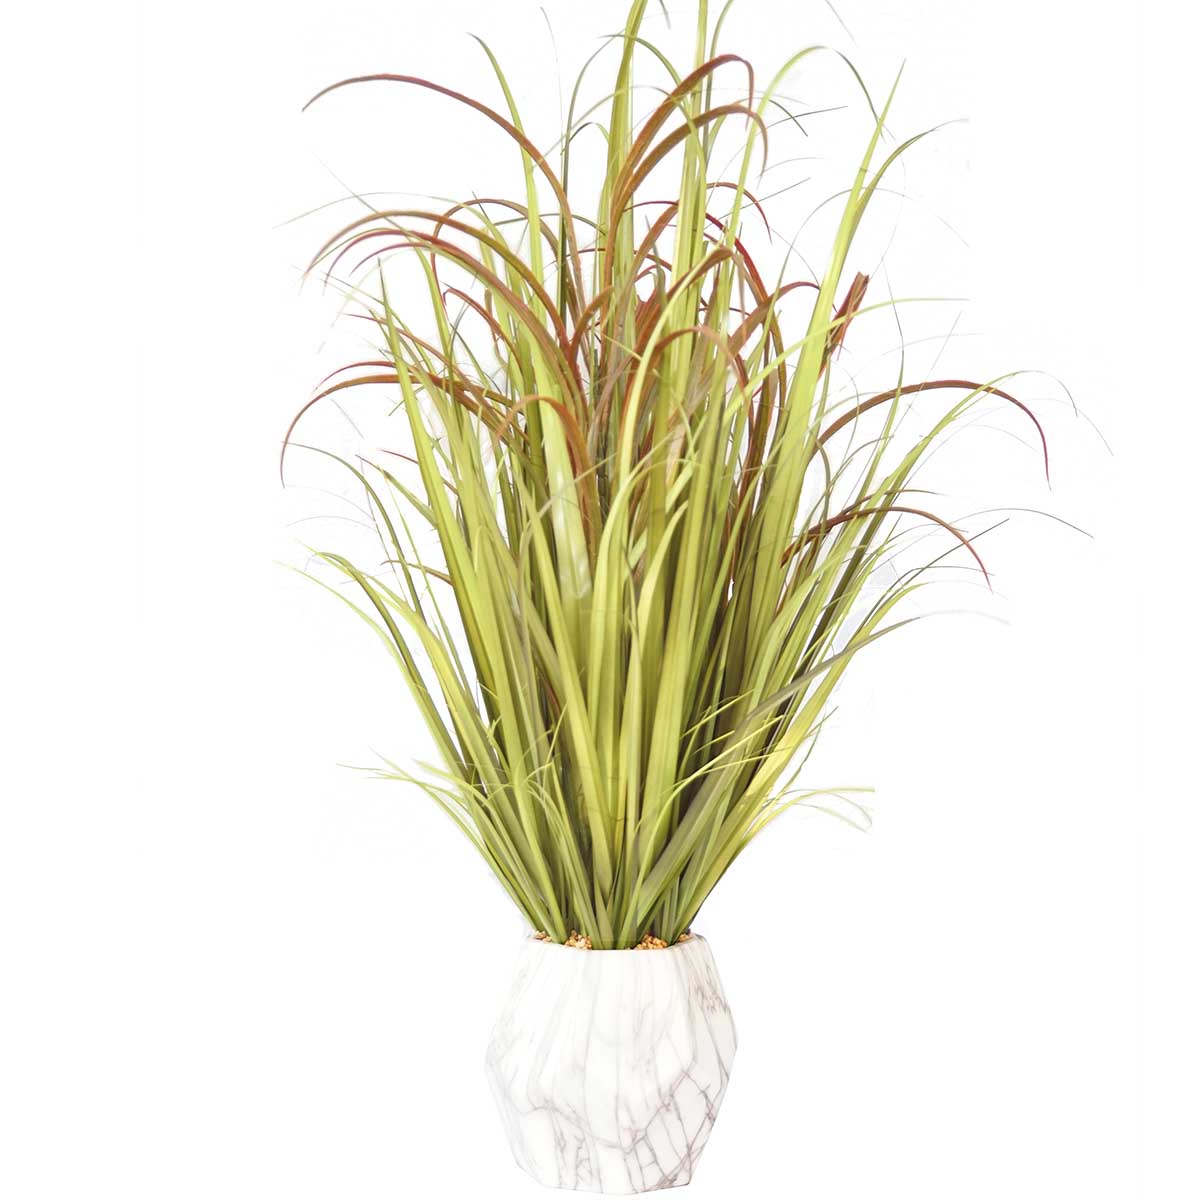 Vha102460 Plastic Grass & Onion Grass In Ceramic Pot